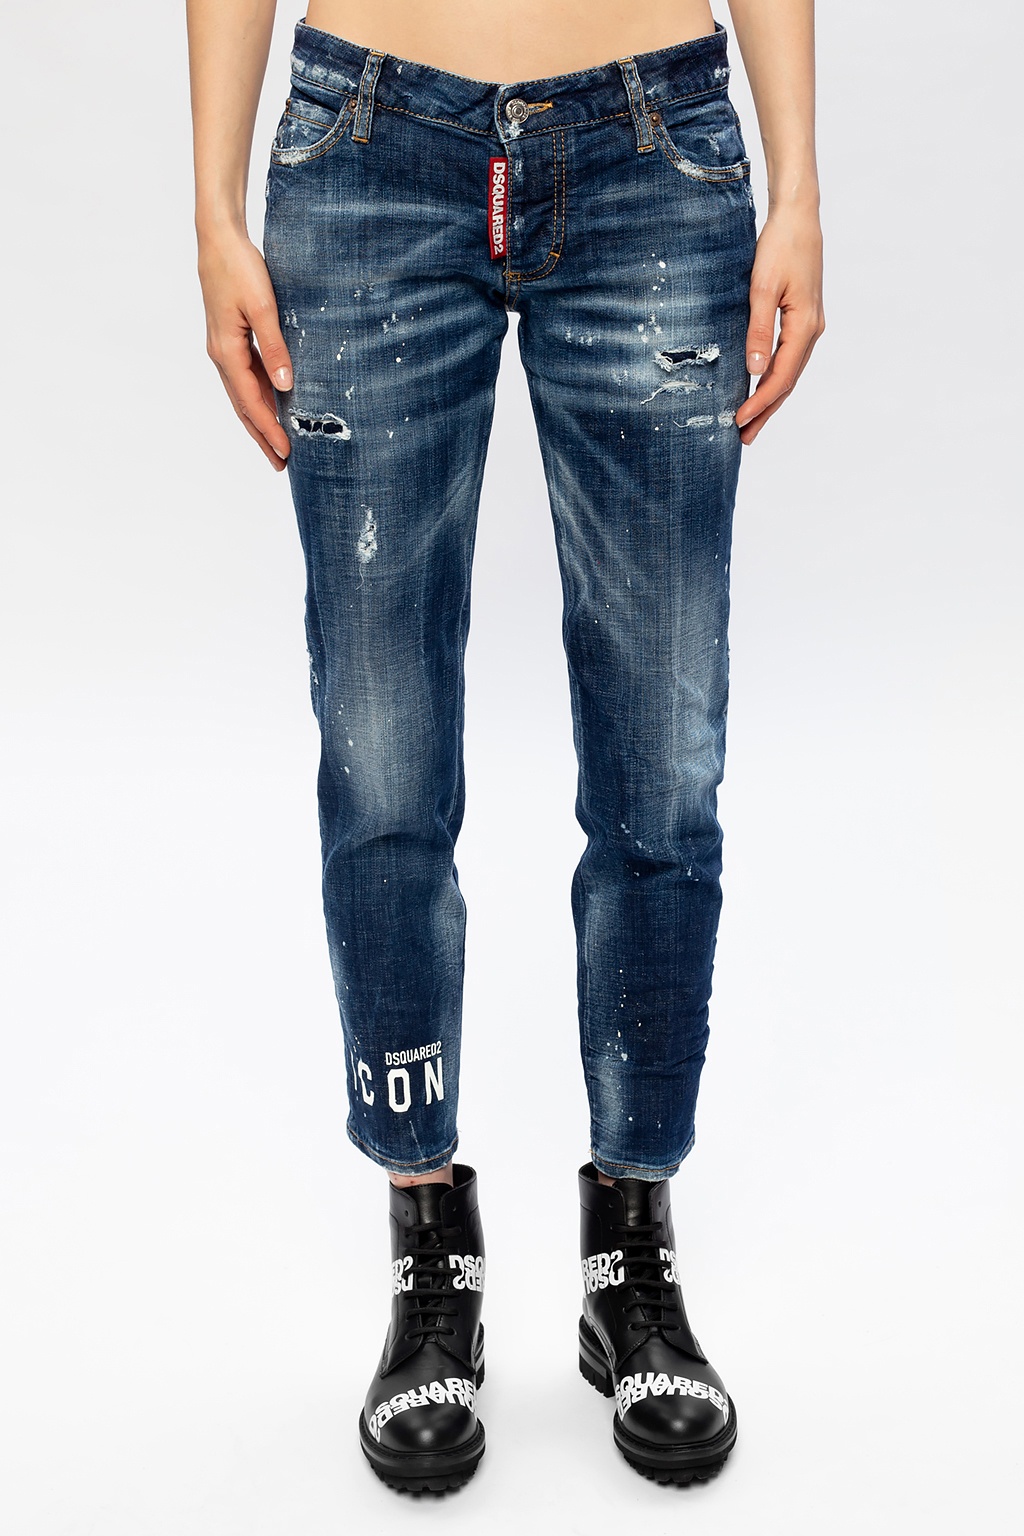 Dsquared2 ‘Jennifer Cropped’ jeans | Women's Clothing | Vitkac